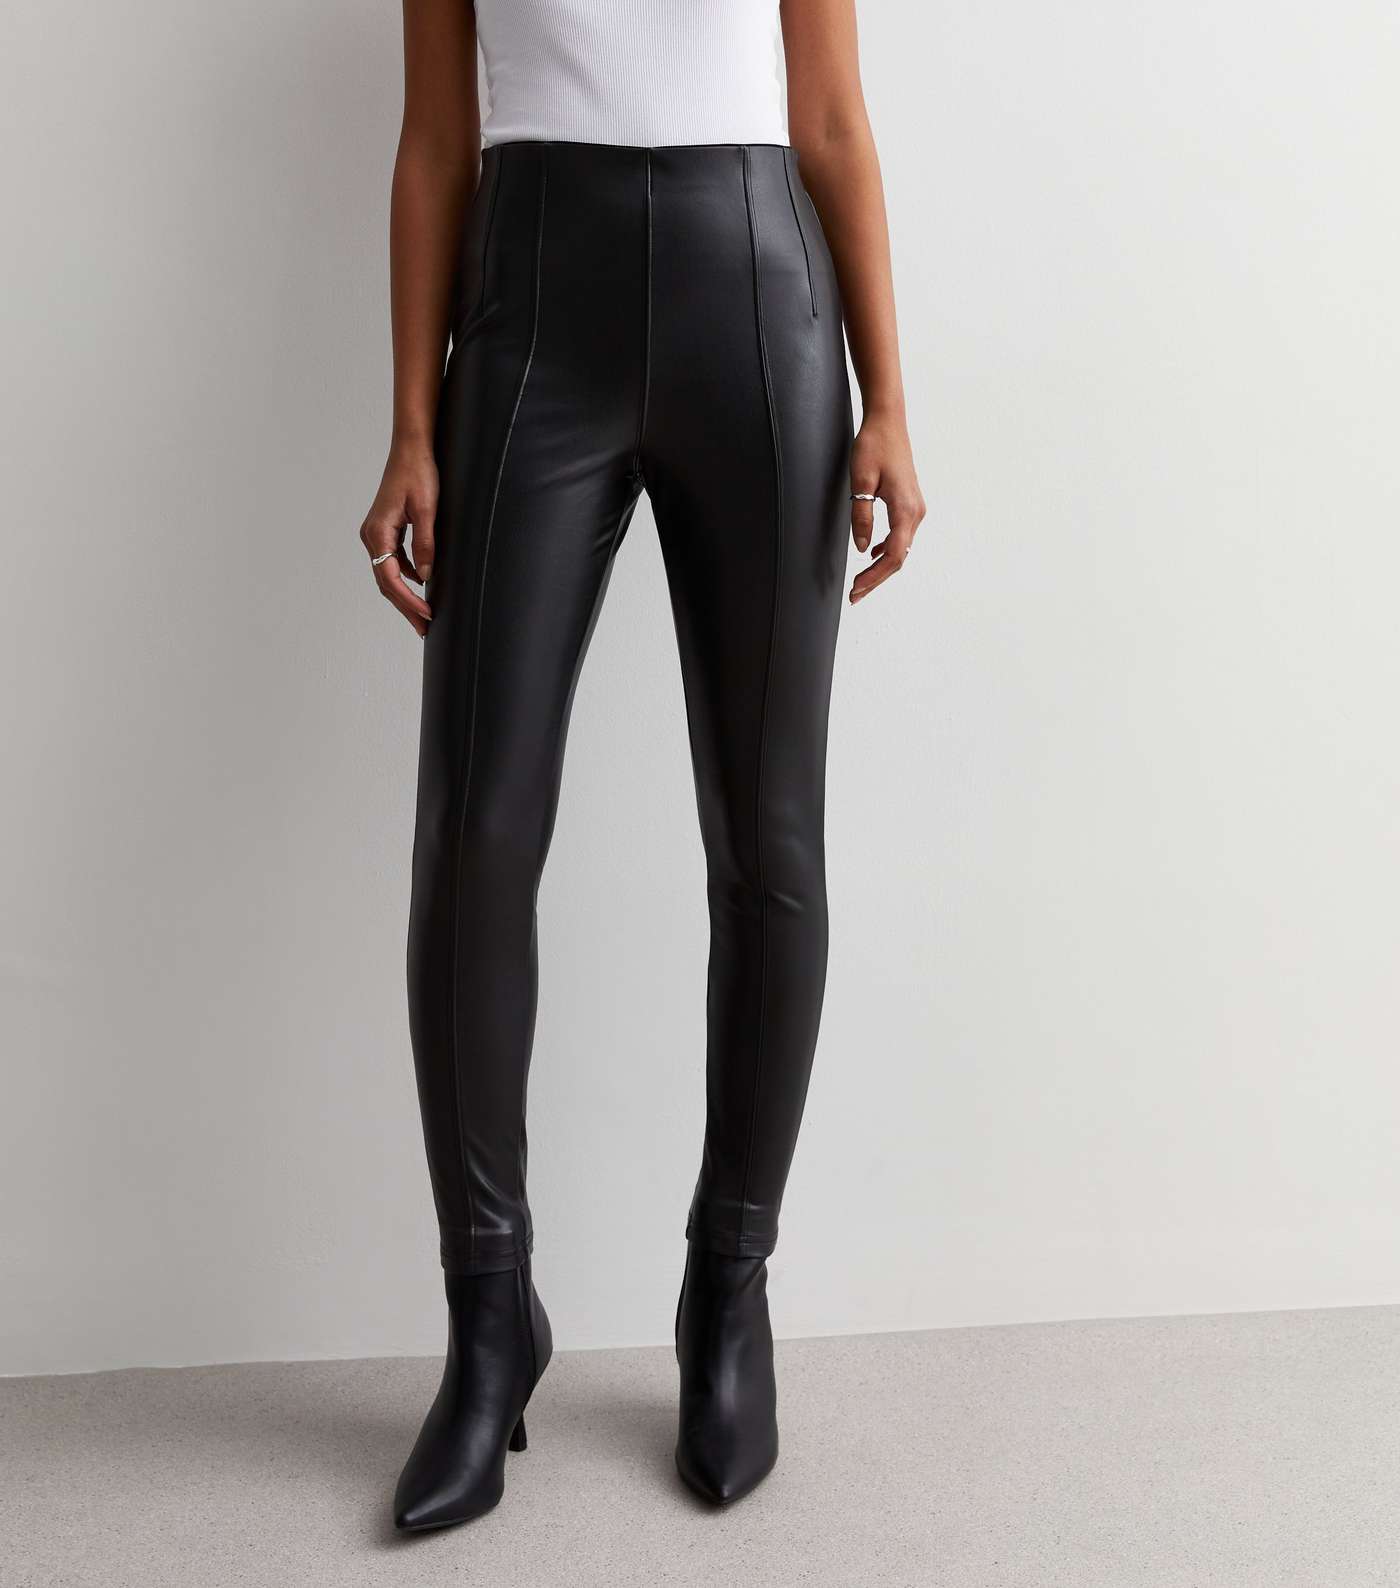 Black Leather-Look High Waist Leggings Image 3